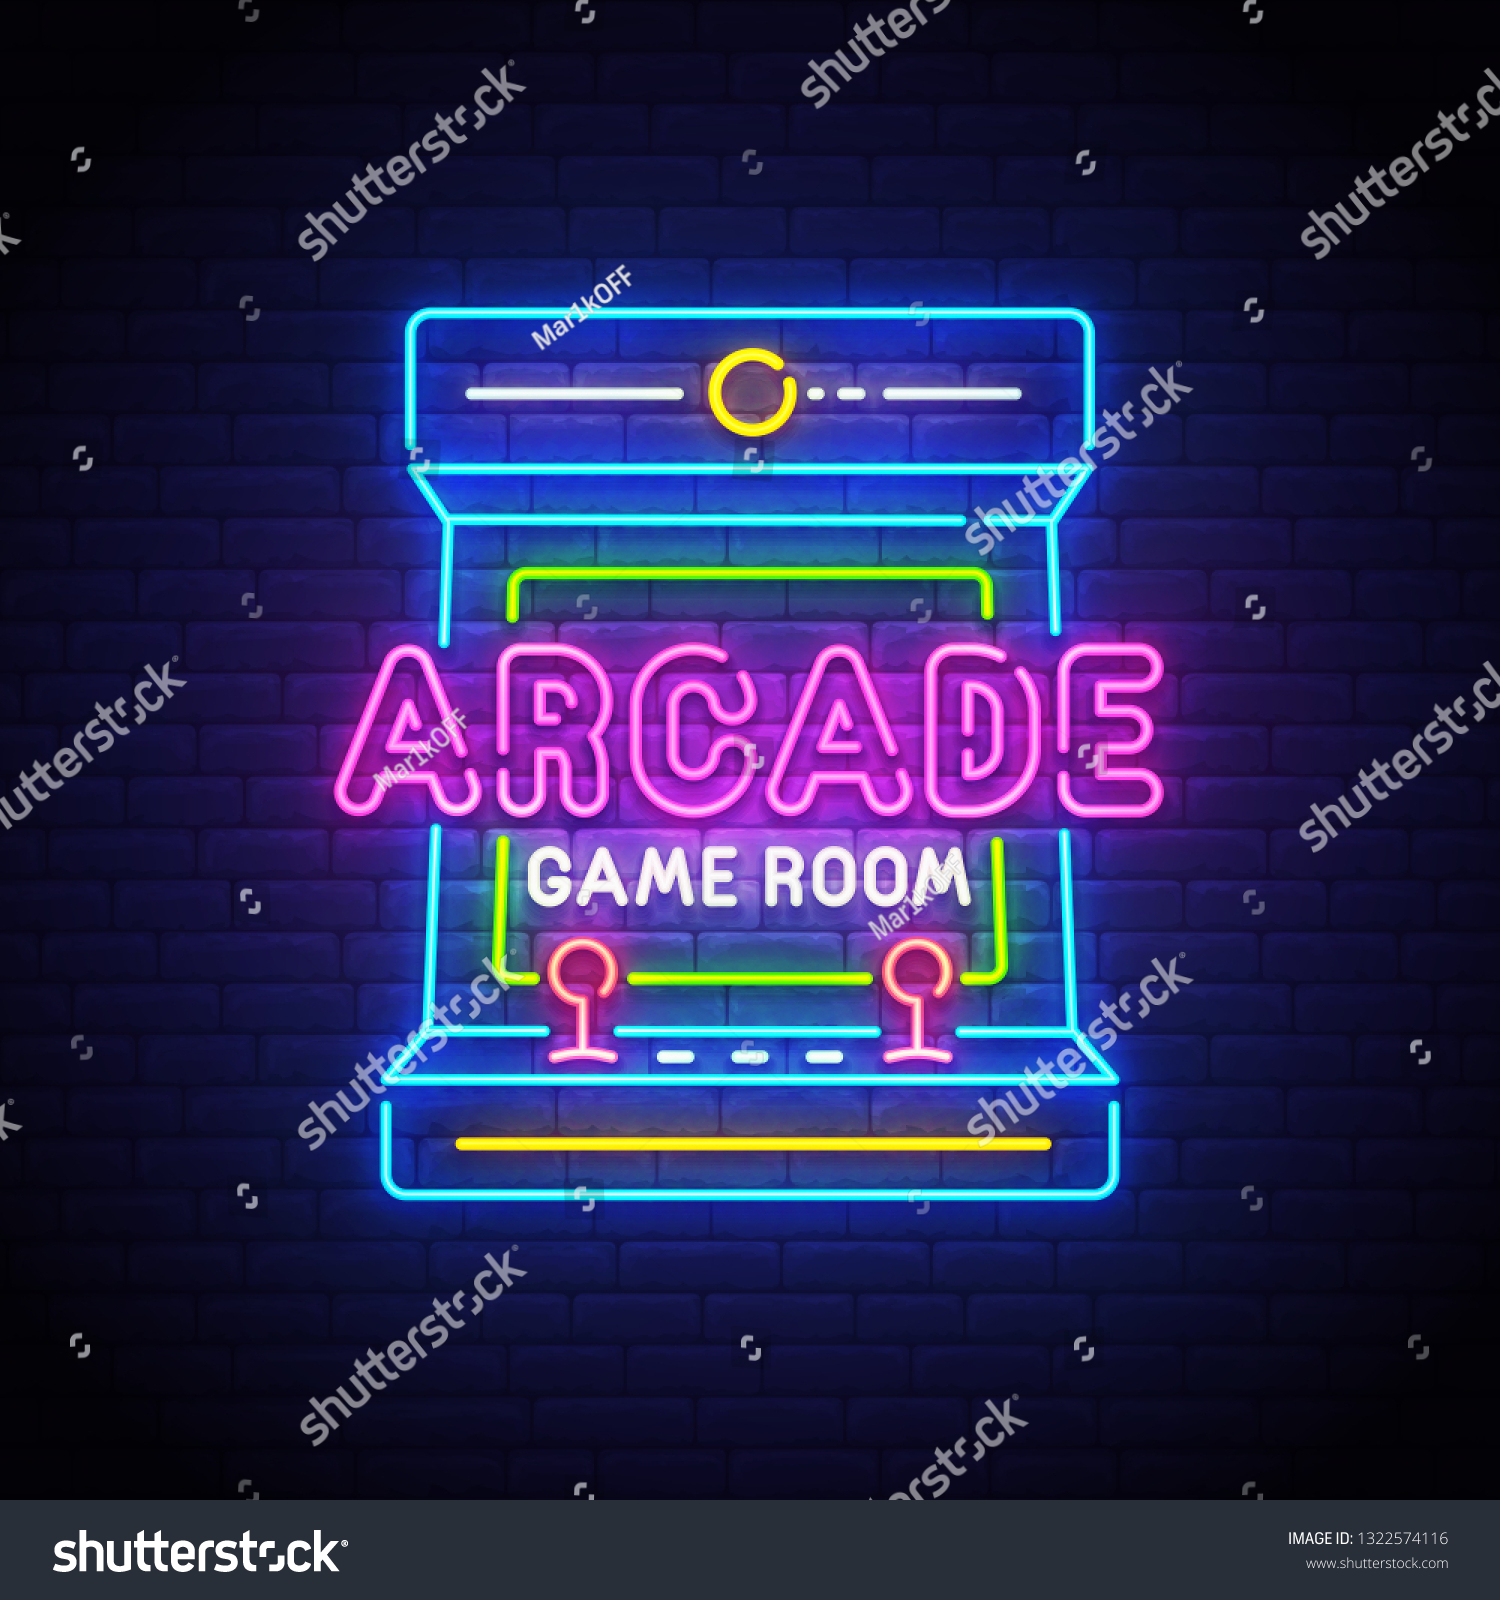 Arcade Games Neon Sign Bright Signboard Stock Vector (Royalty Free ...